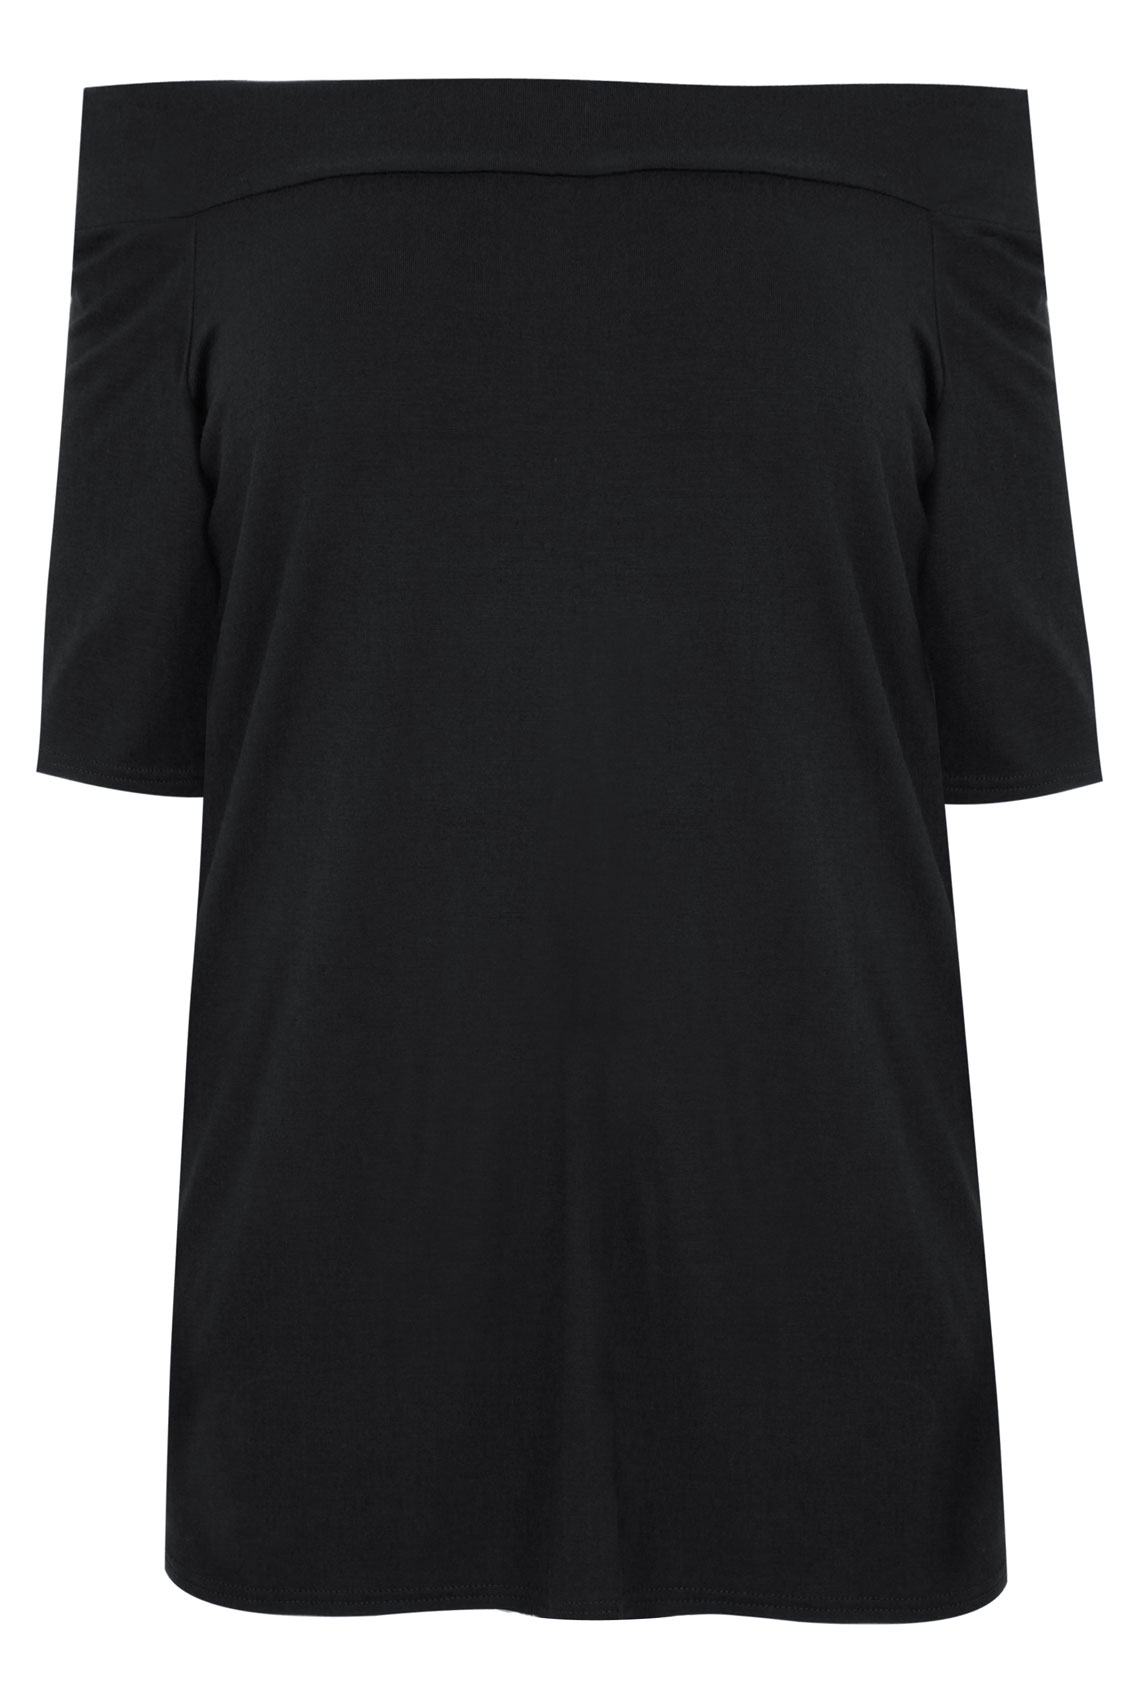 Black 3/4 Sleeve Bardot Top plus size plus size 16,18,20,22,24,26,28,30,32